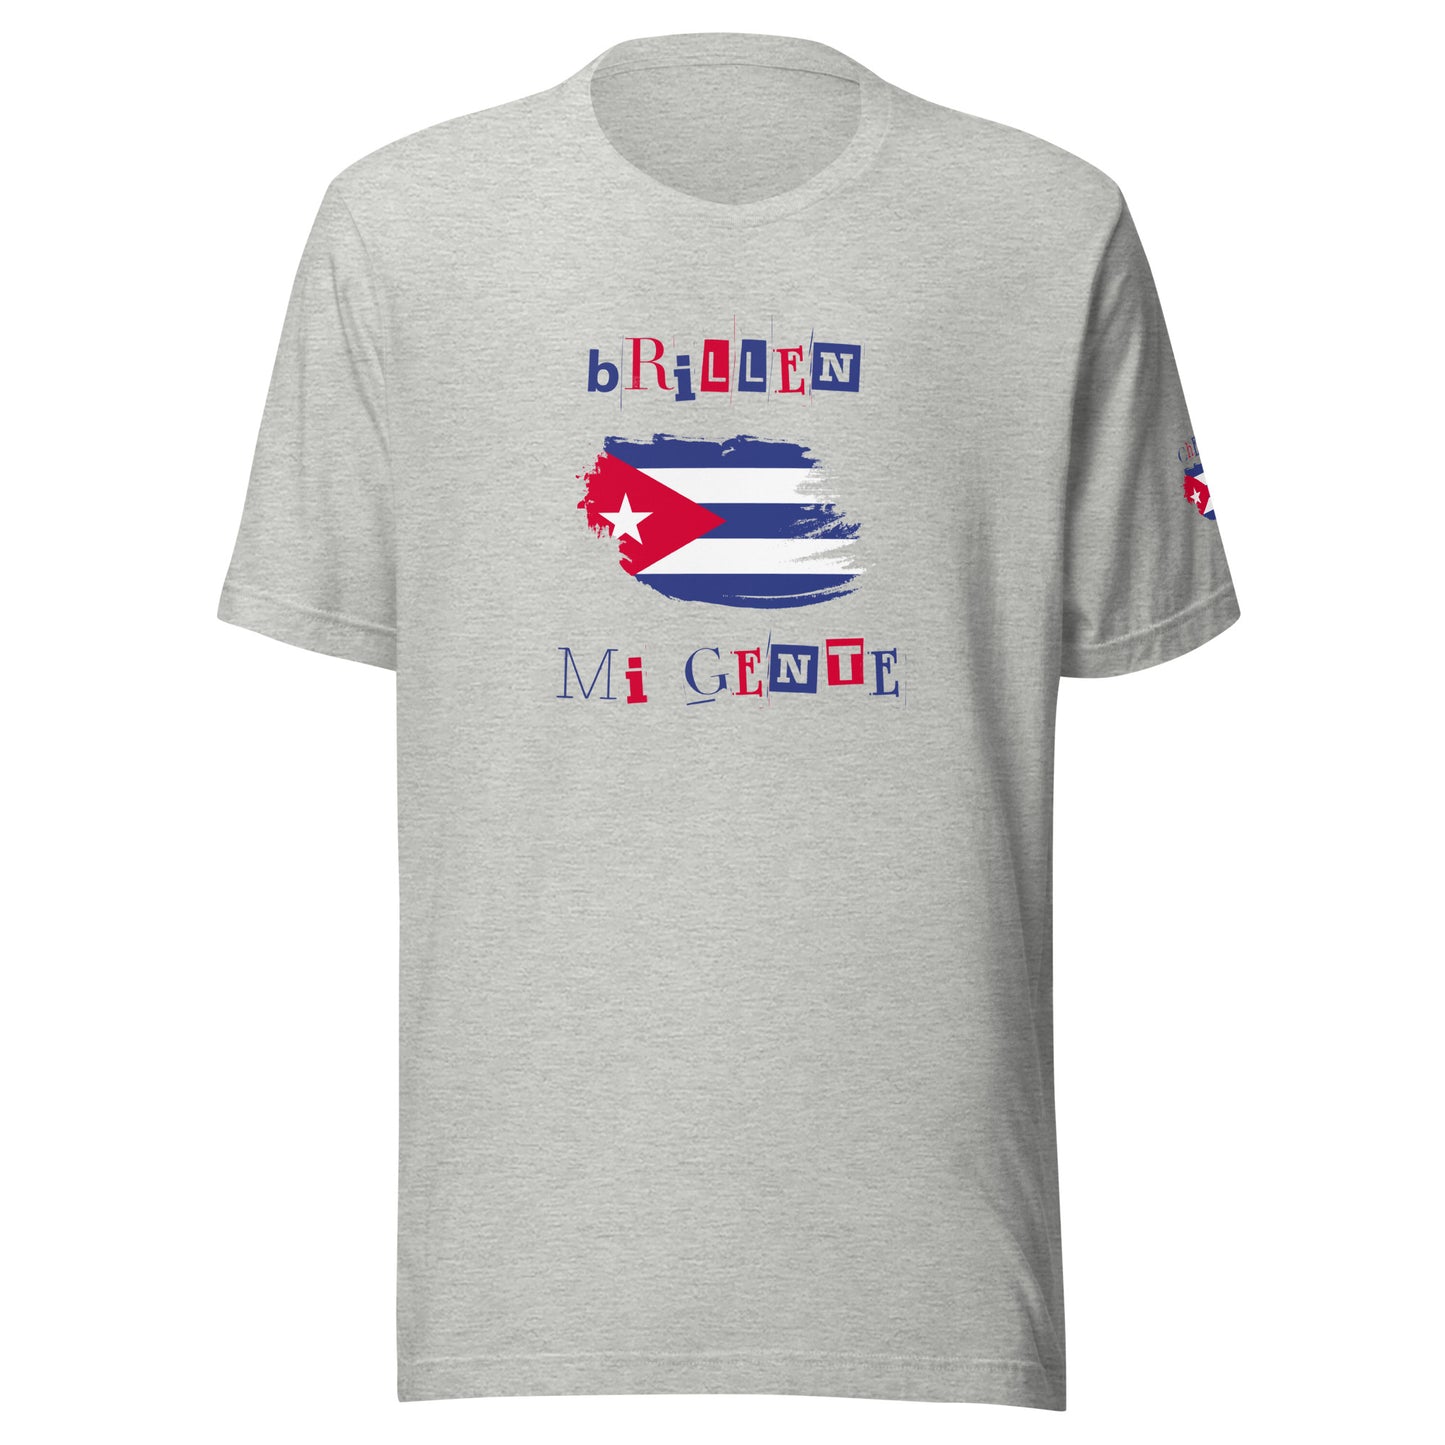 Brillen Mi Gente Cuba I, Unisex t-shirt